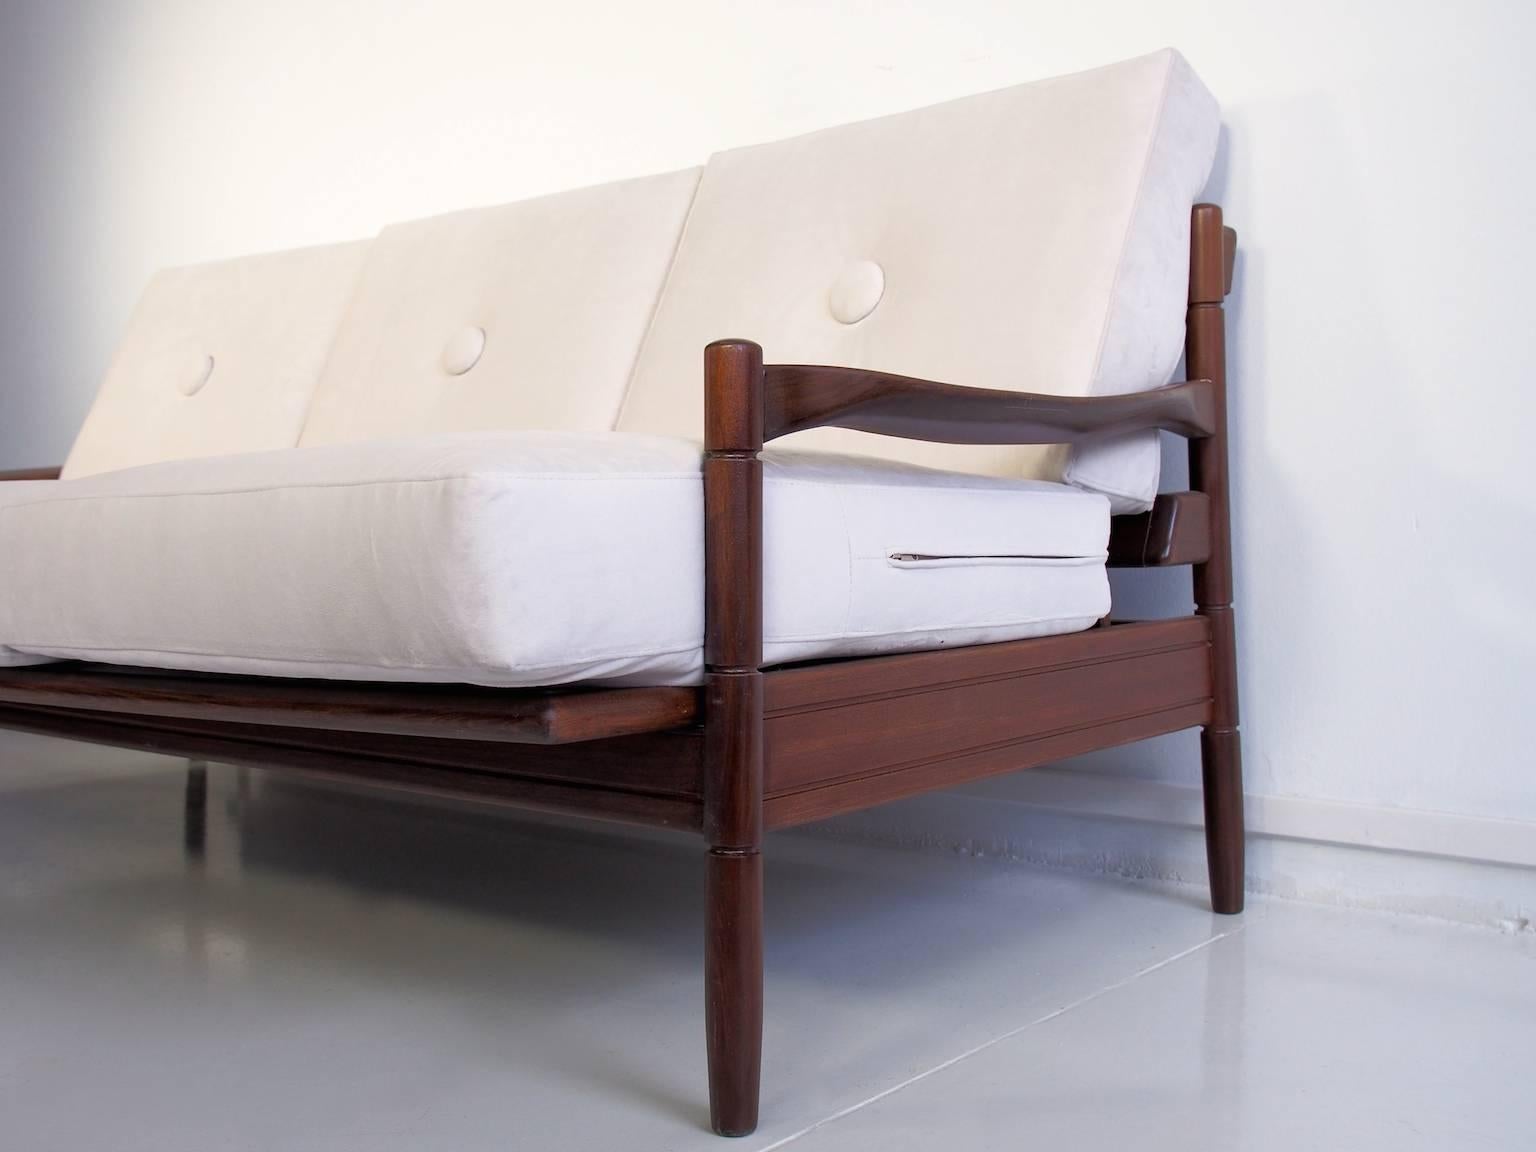 20th Century Scandinavian Modern Style Three-Seat White Sofa with Wooden Frame